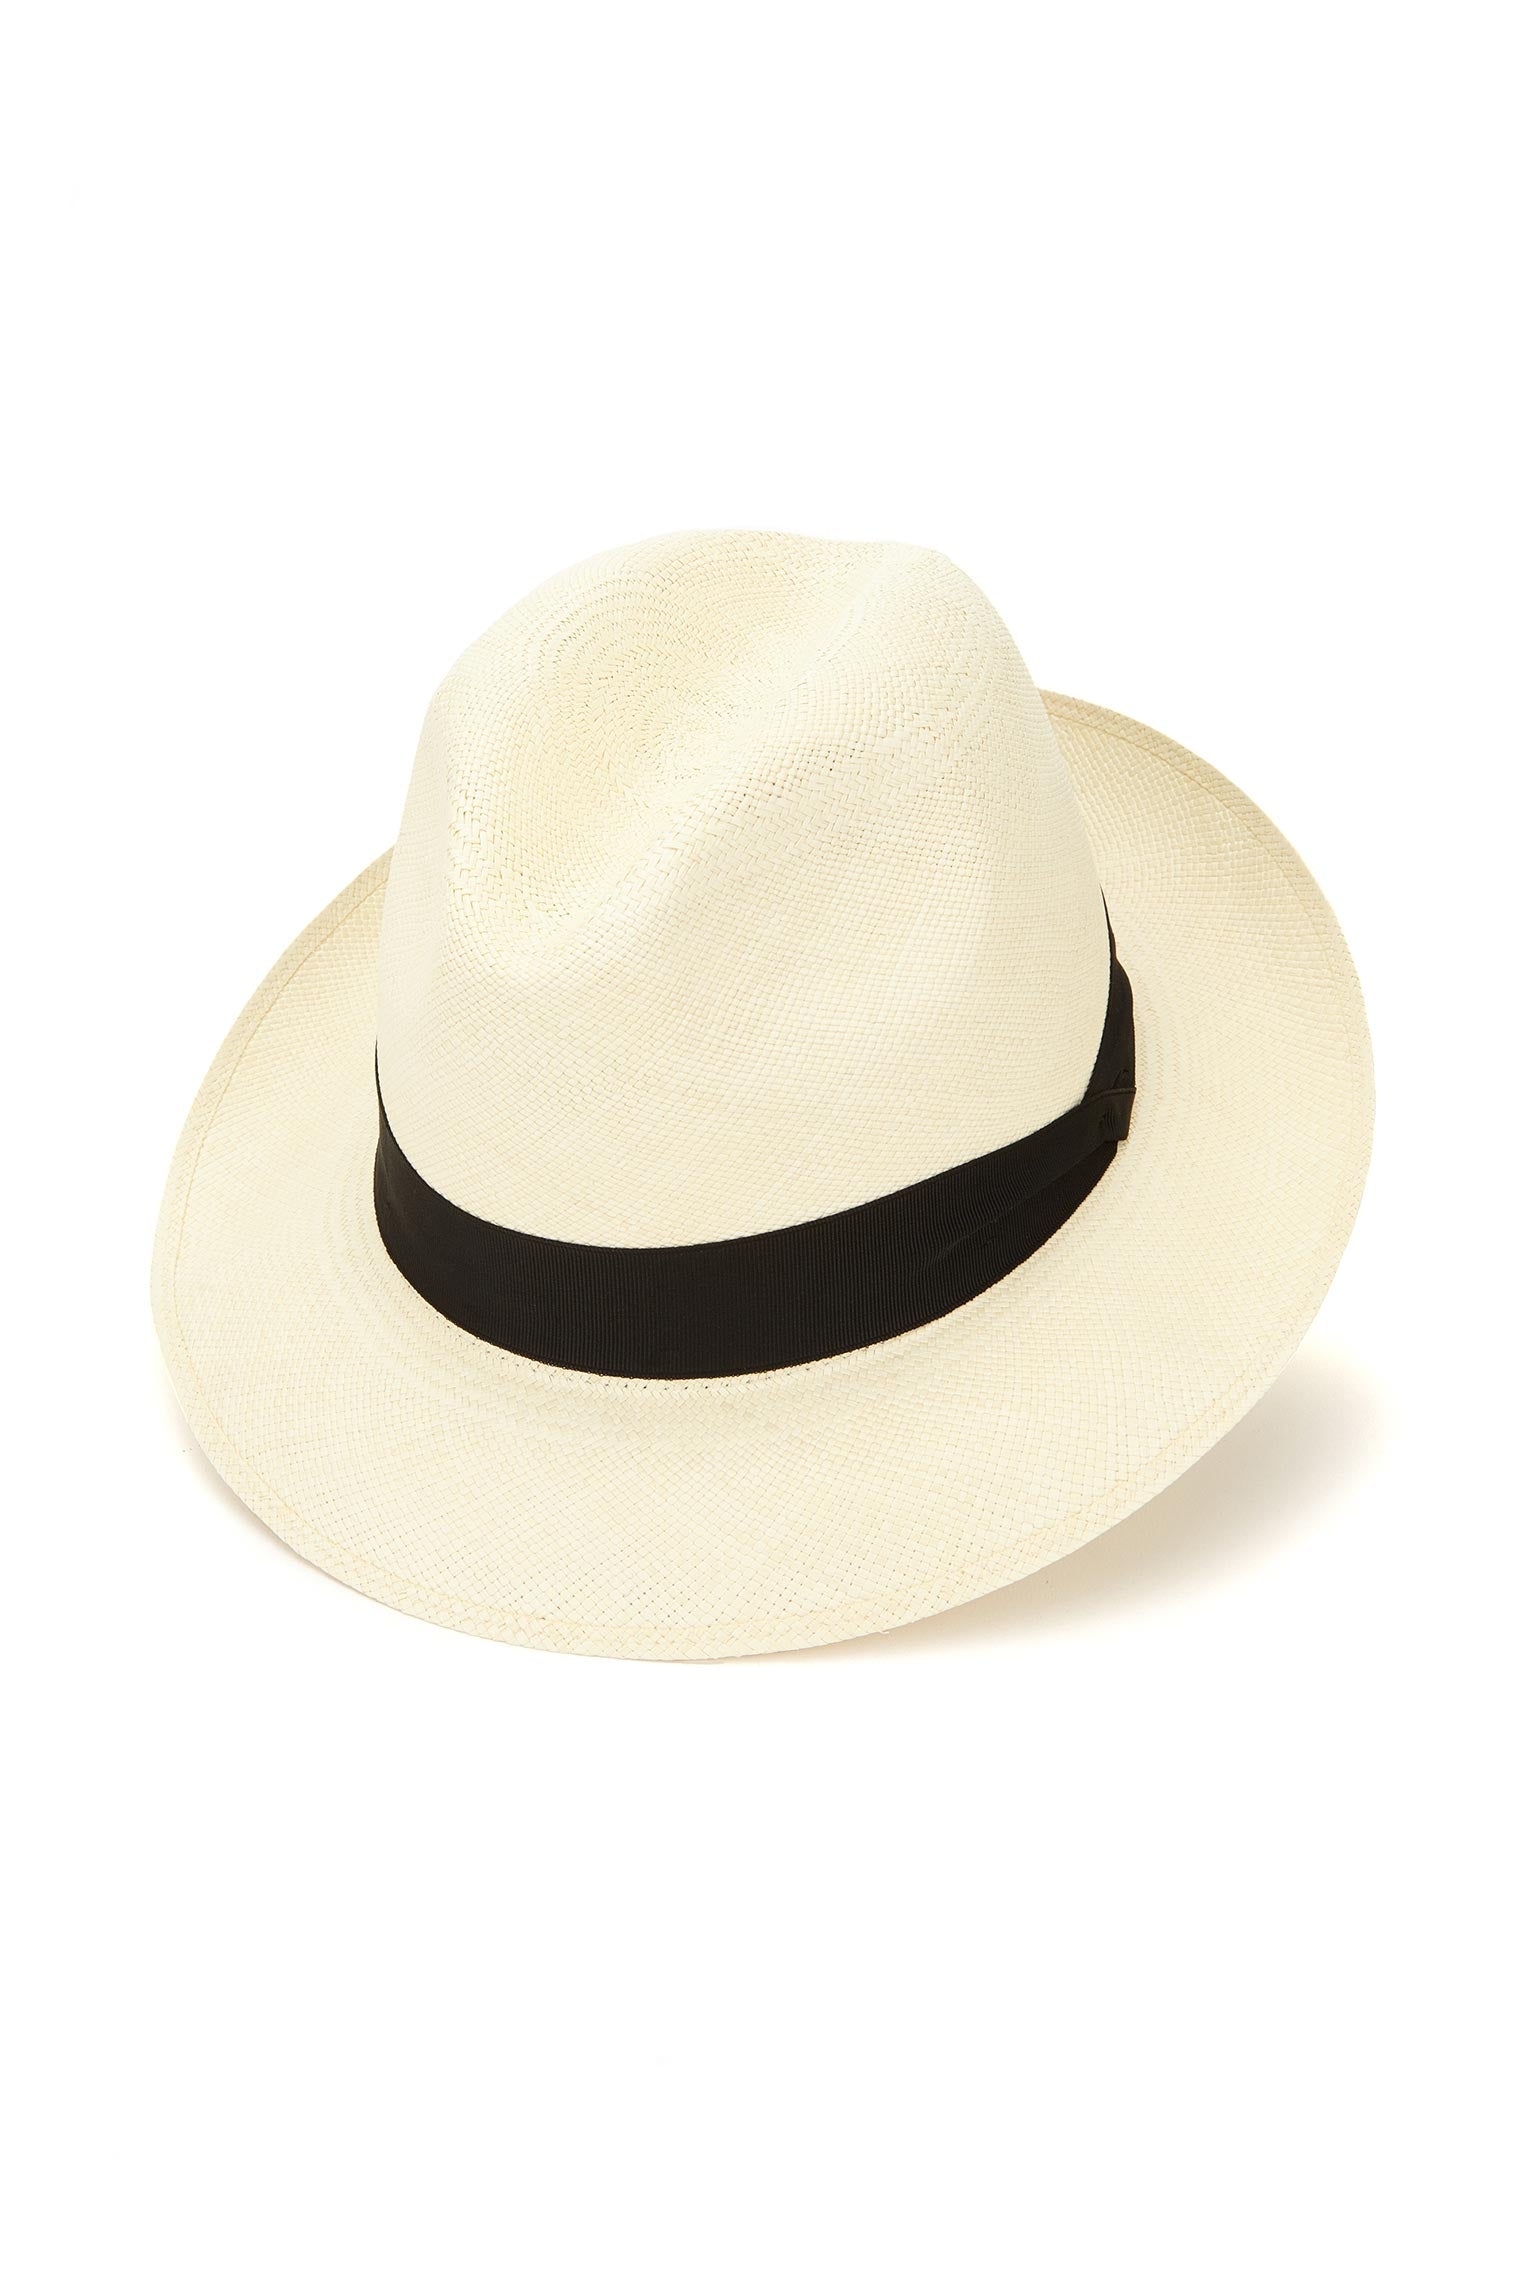 Classic Panama - Panamas and Sun Hats for Men - Lock & Co. Hatters London UK